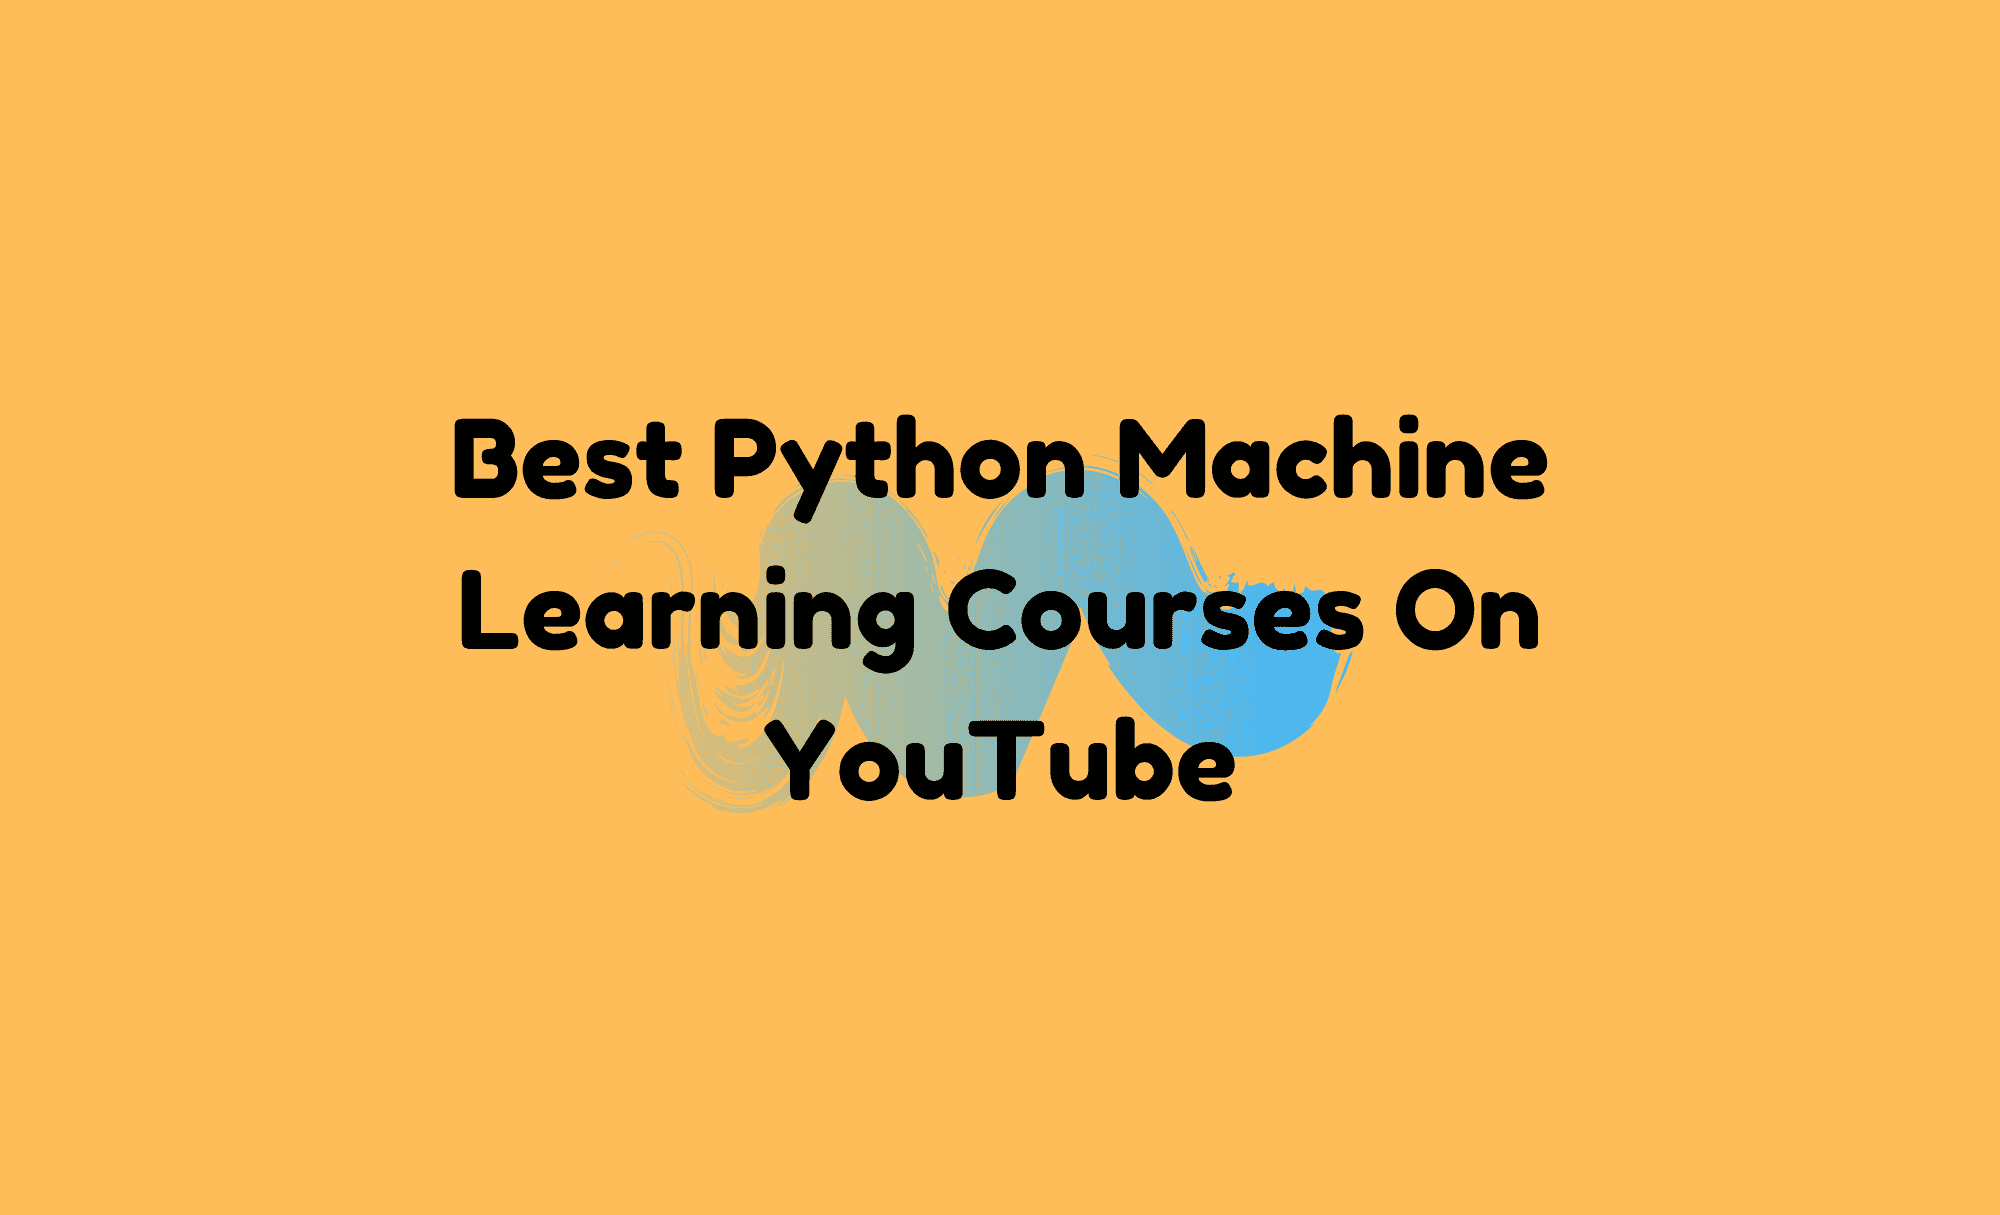 Best Python Machine Learning Courses On YouTube